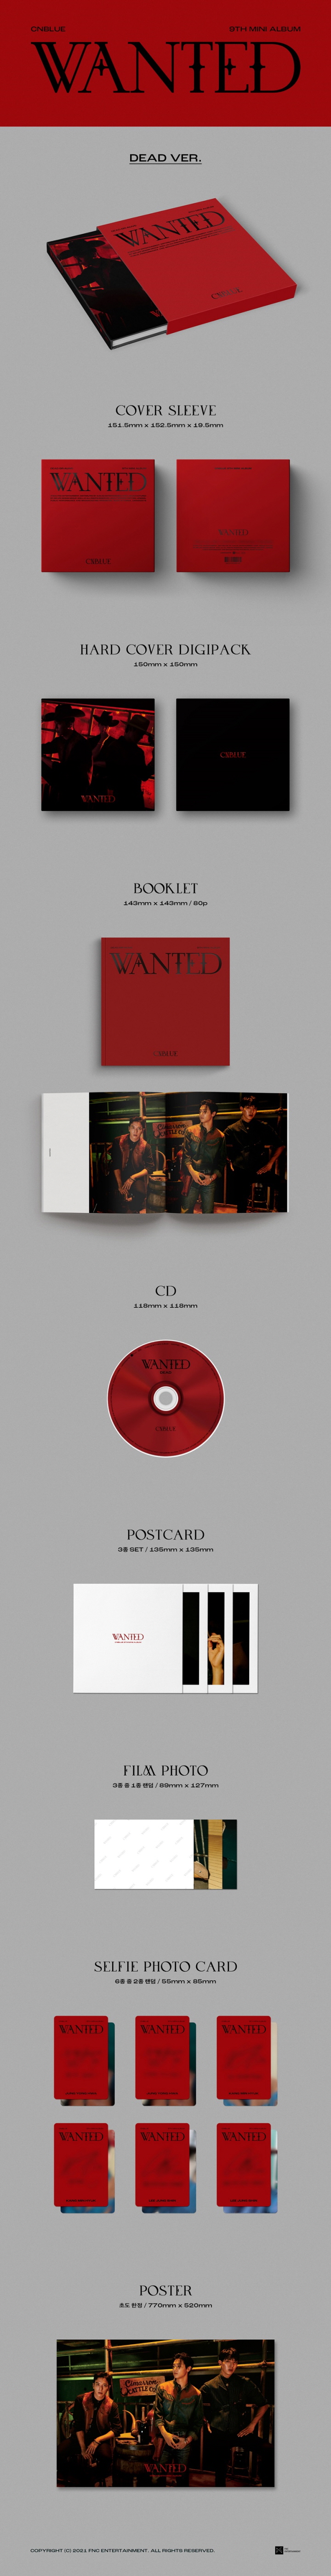 CNBLUE - WANTED - 9th Mini Album